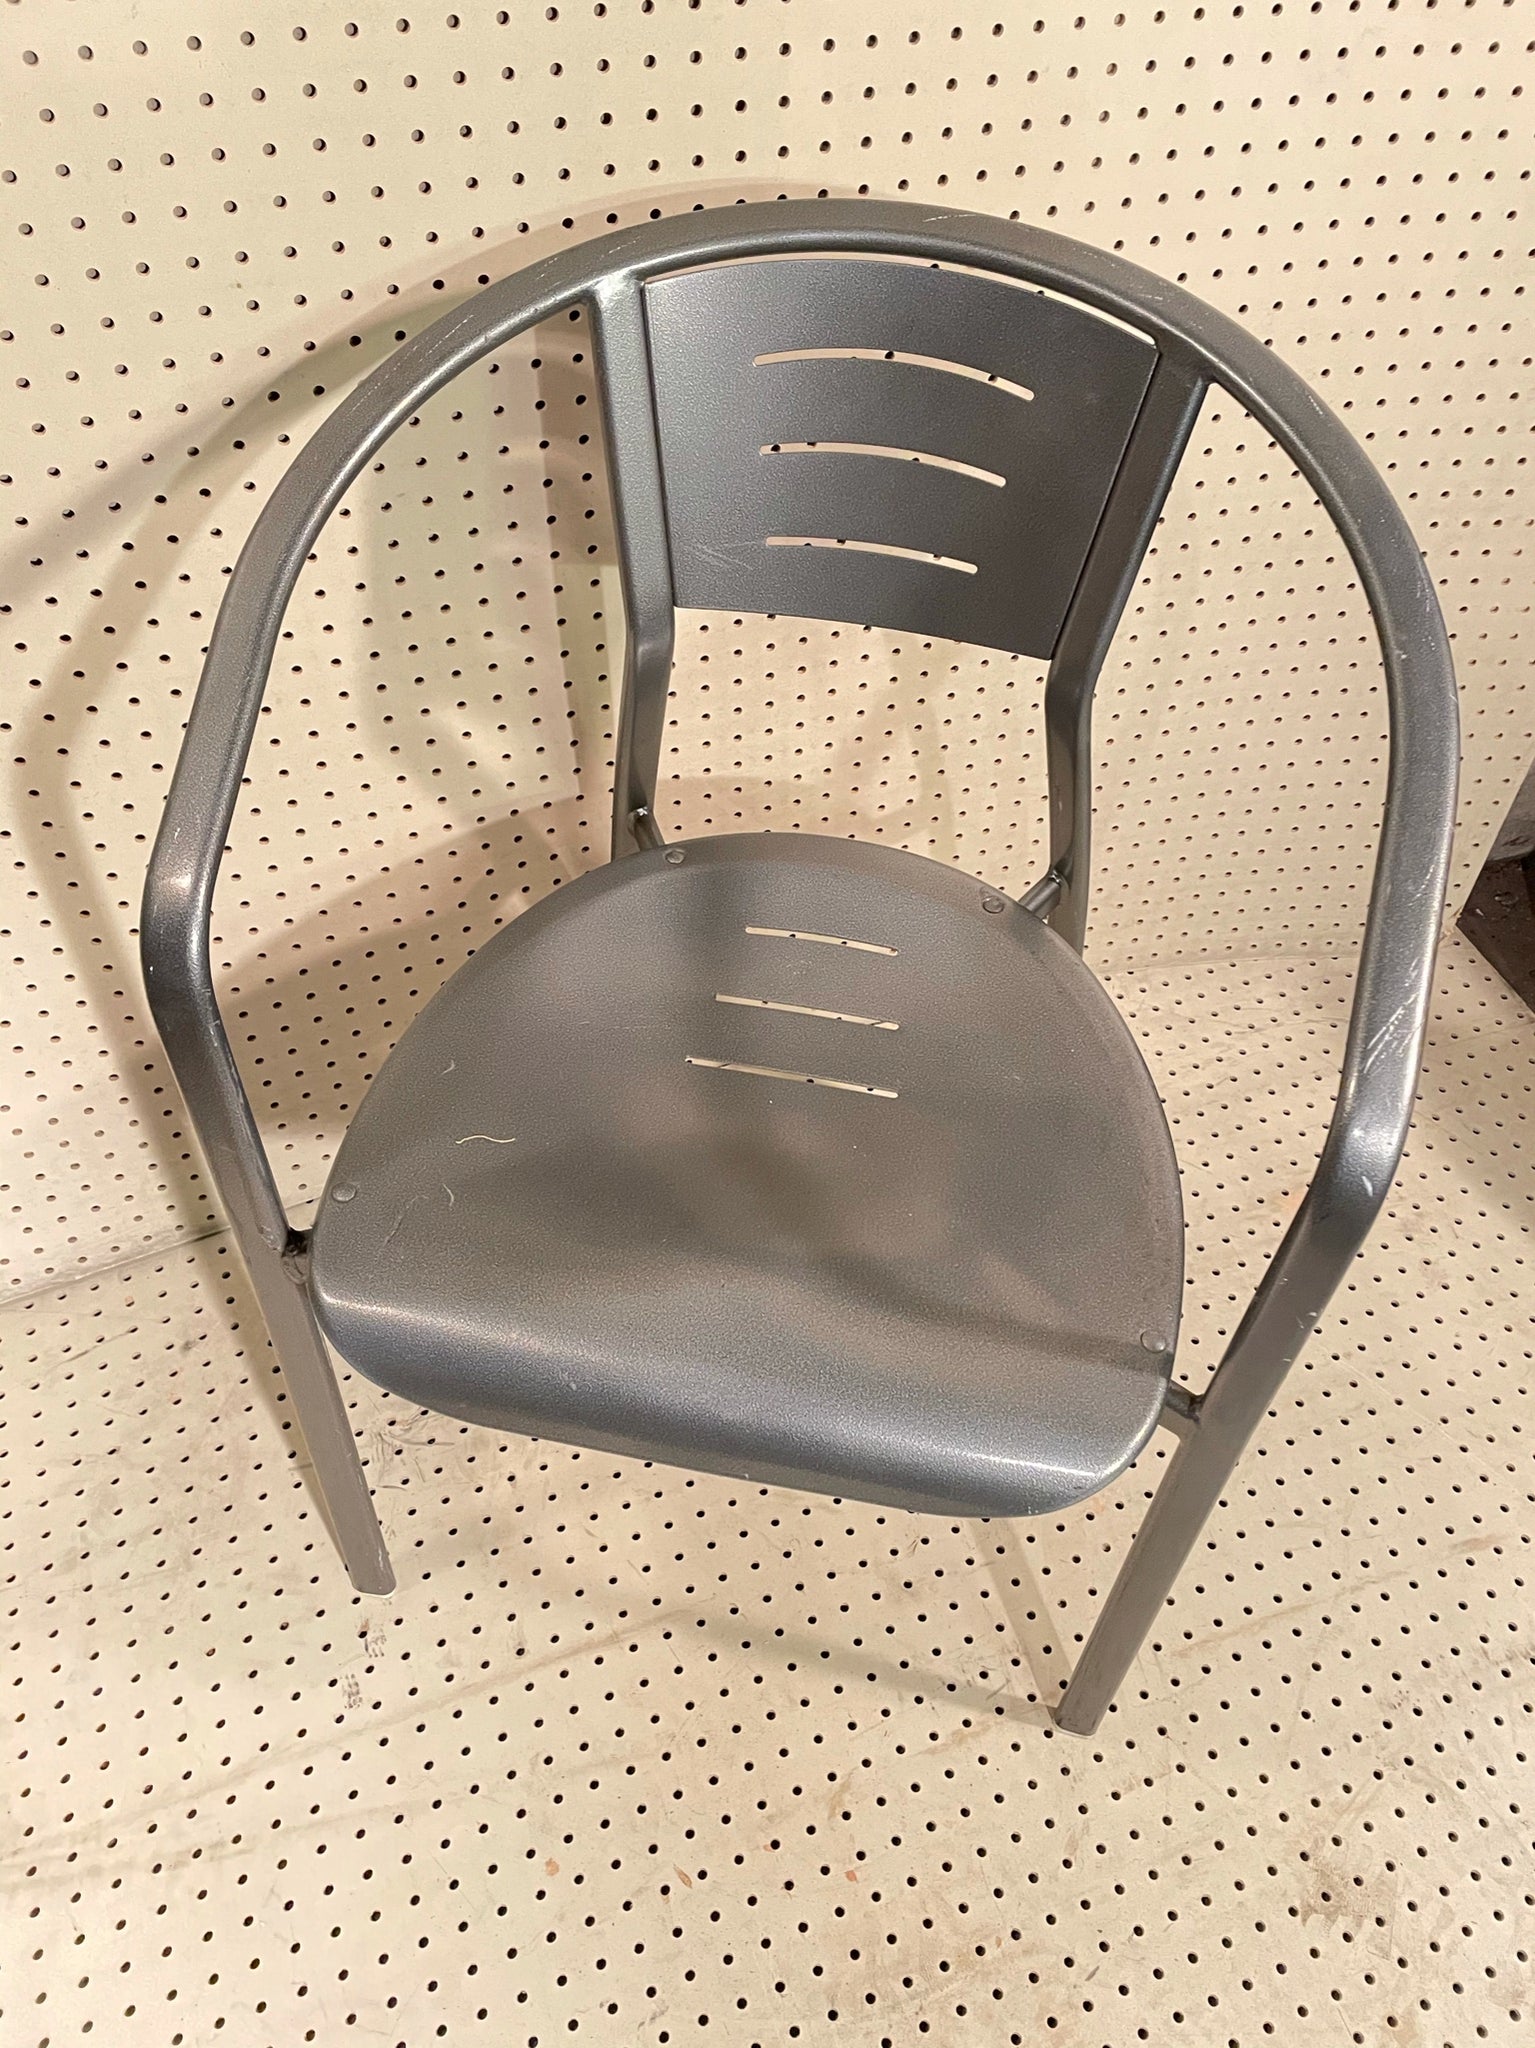 Post Modern Metal Chair